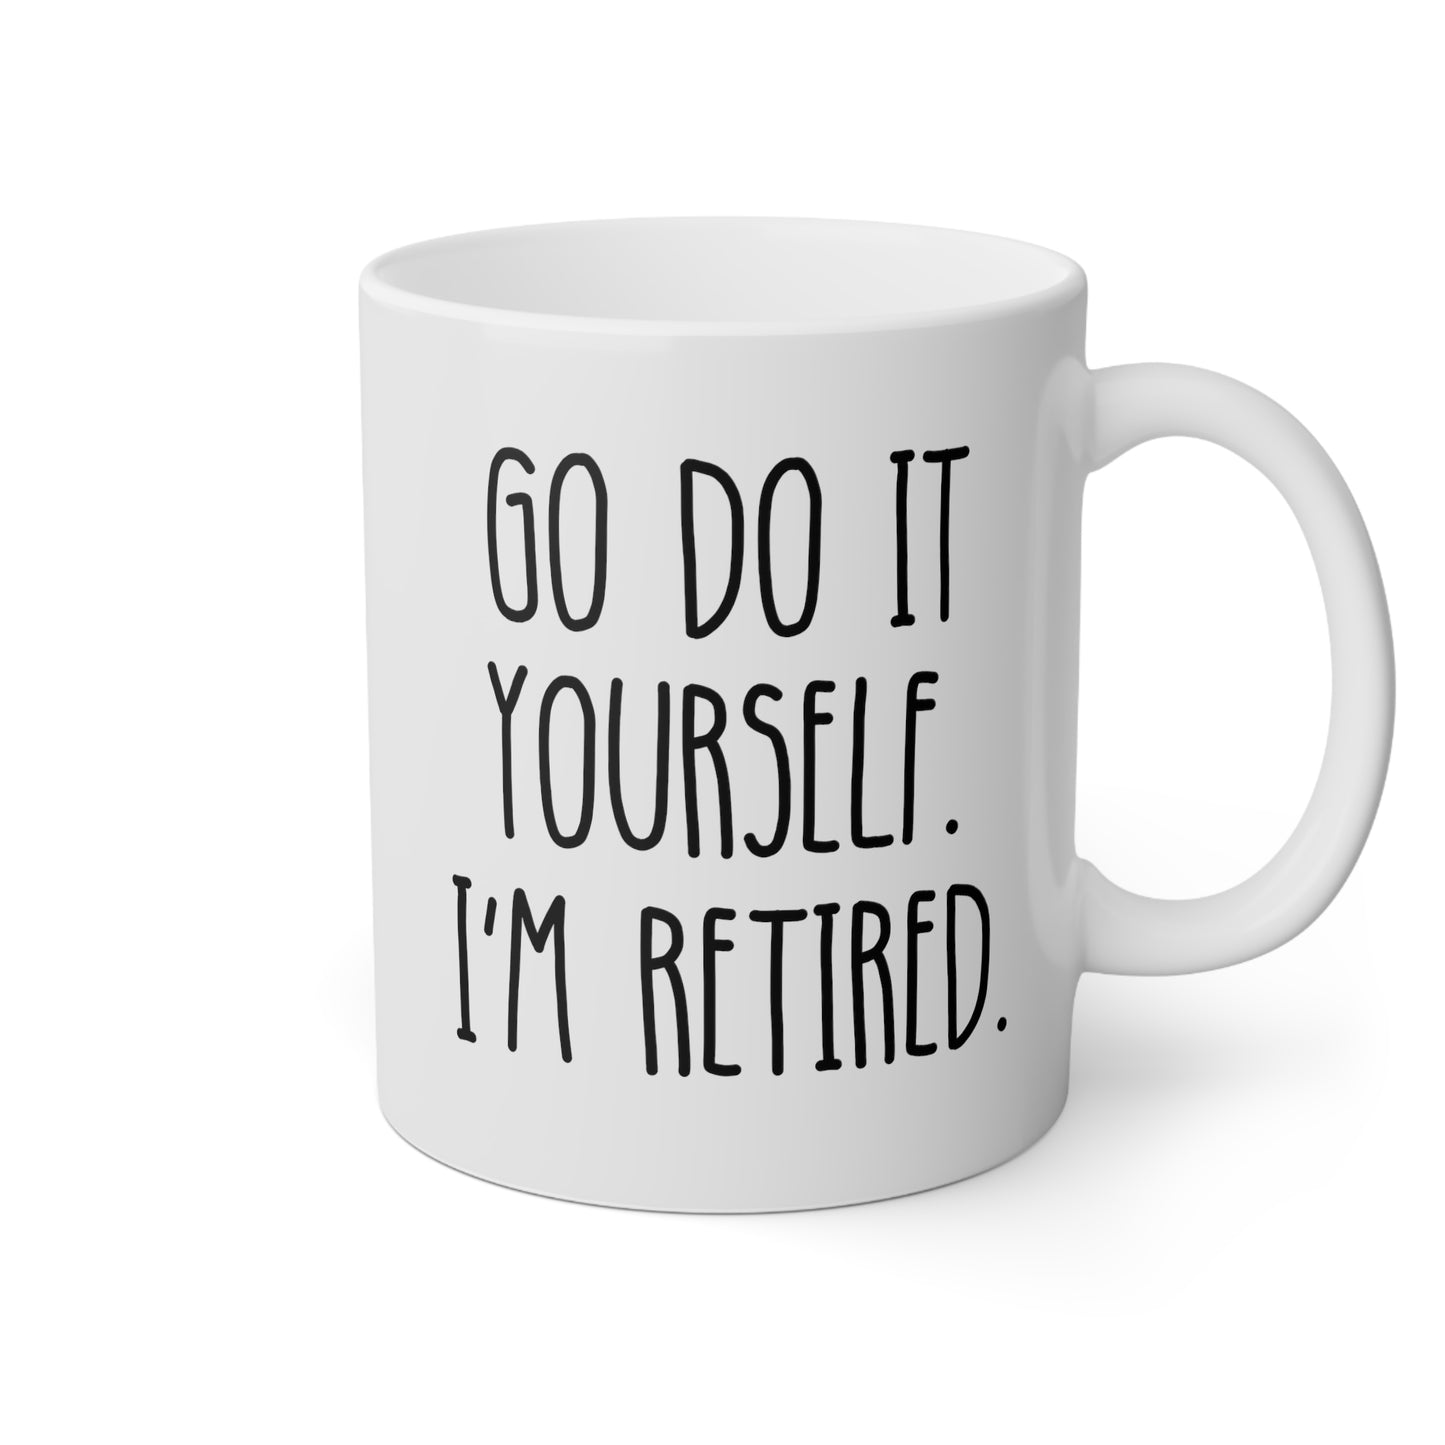 Go Do It Yourself I'm Retired 11oz white funny large coffee mug gift for­ retiree new retirement women men waveywares wavey wares wavywares wavy wares